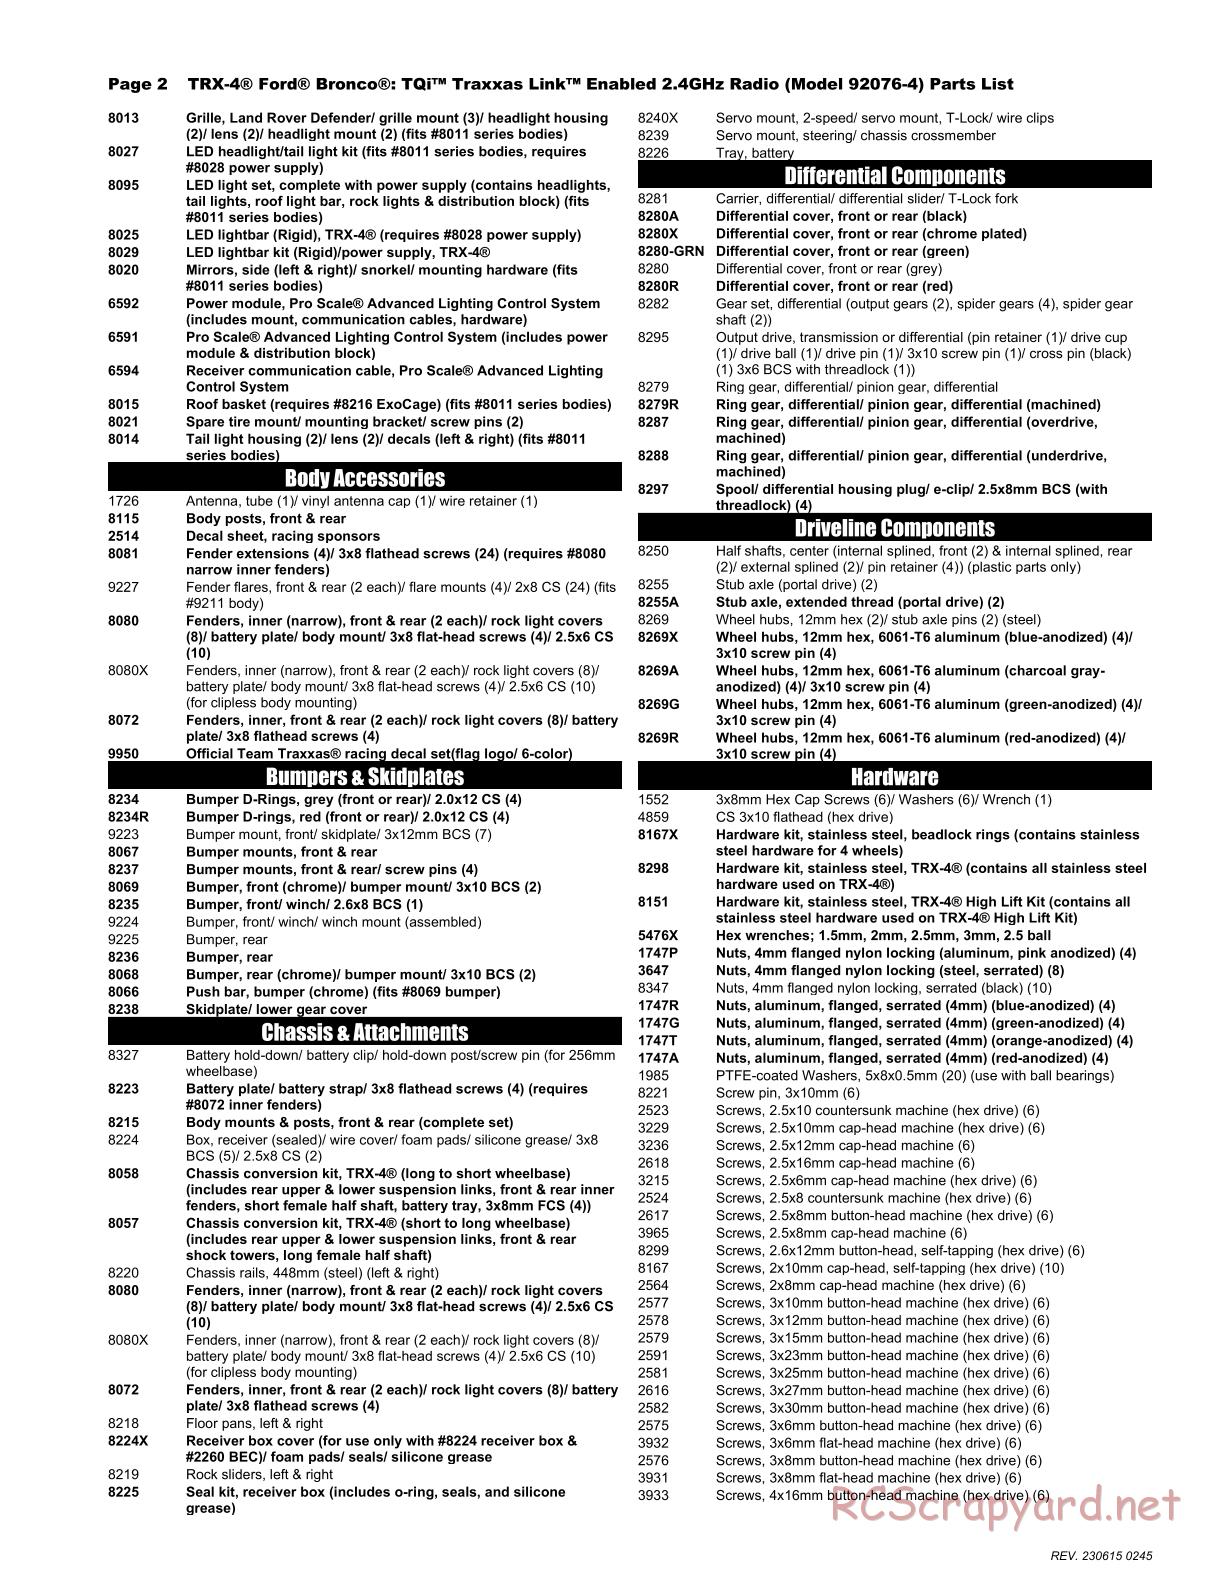 Traxxas - TRX-4 Ford Bronco (2021) - Parts List - Page 2